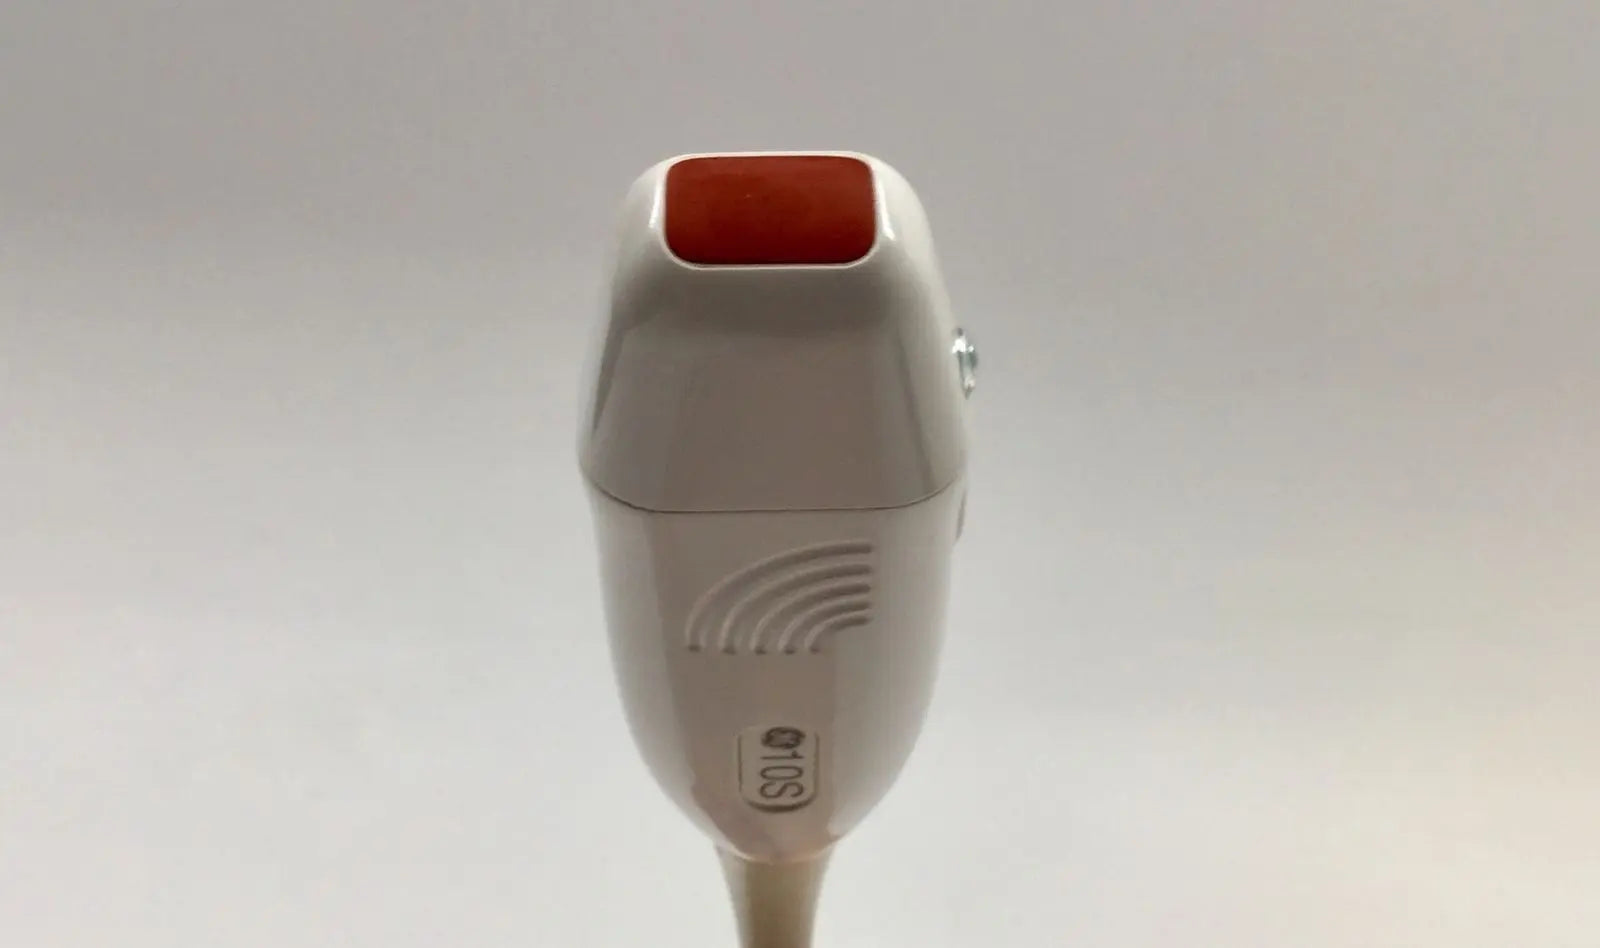 GE 10S Ultrasound Transducer Probe (GP1) DIAGNOSTIC ULTRASOUND MACHINES FOR SALE